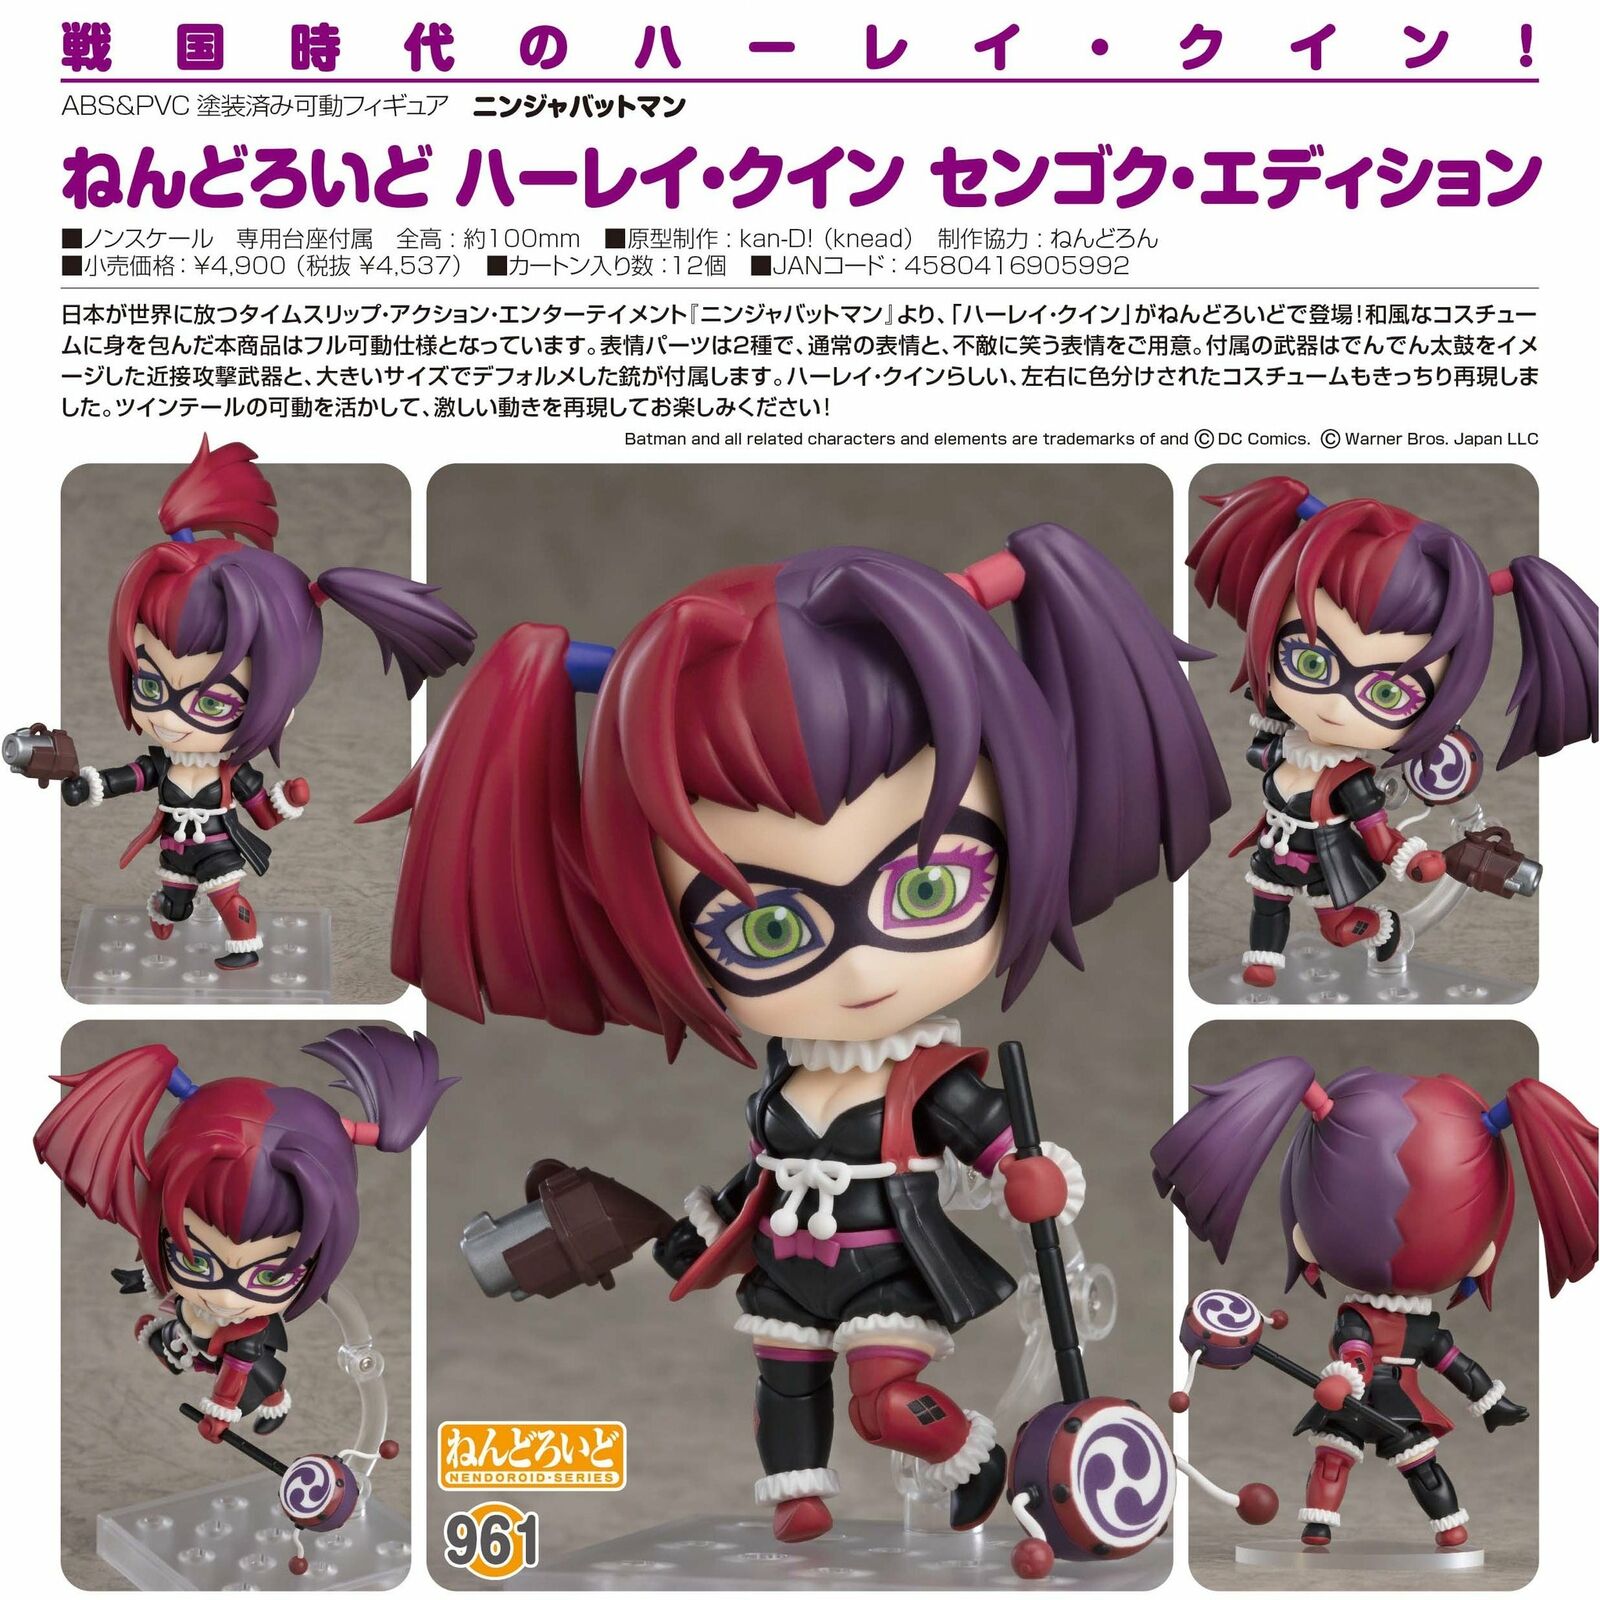 Nendoroid - #961 - Harley Quinn: Sengoku Edition